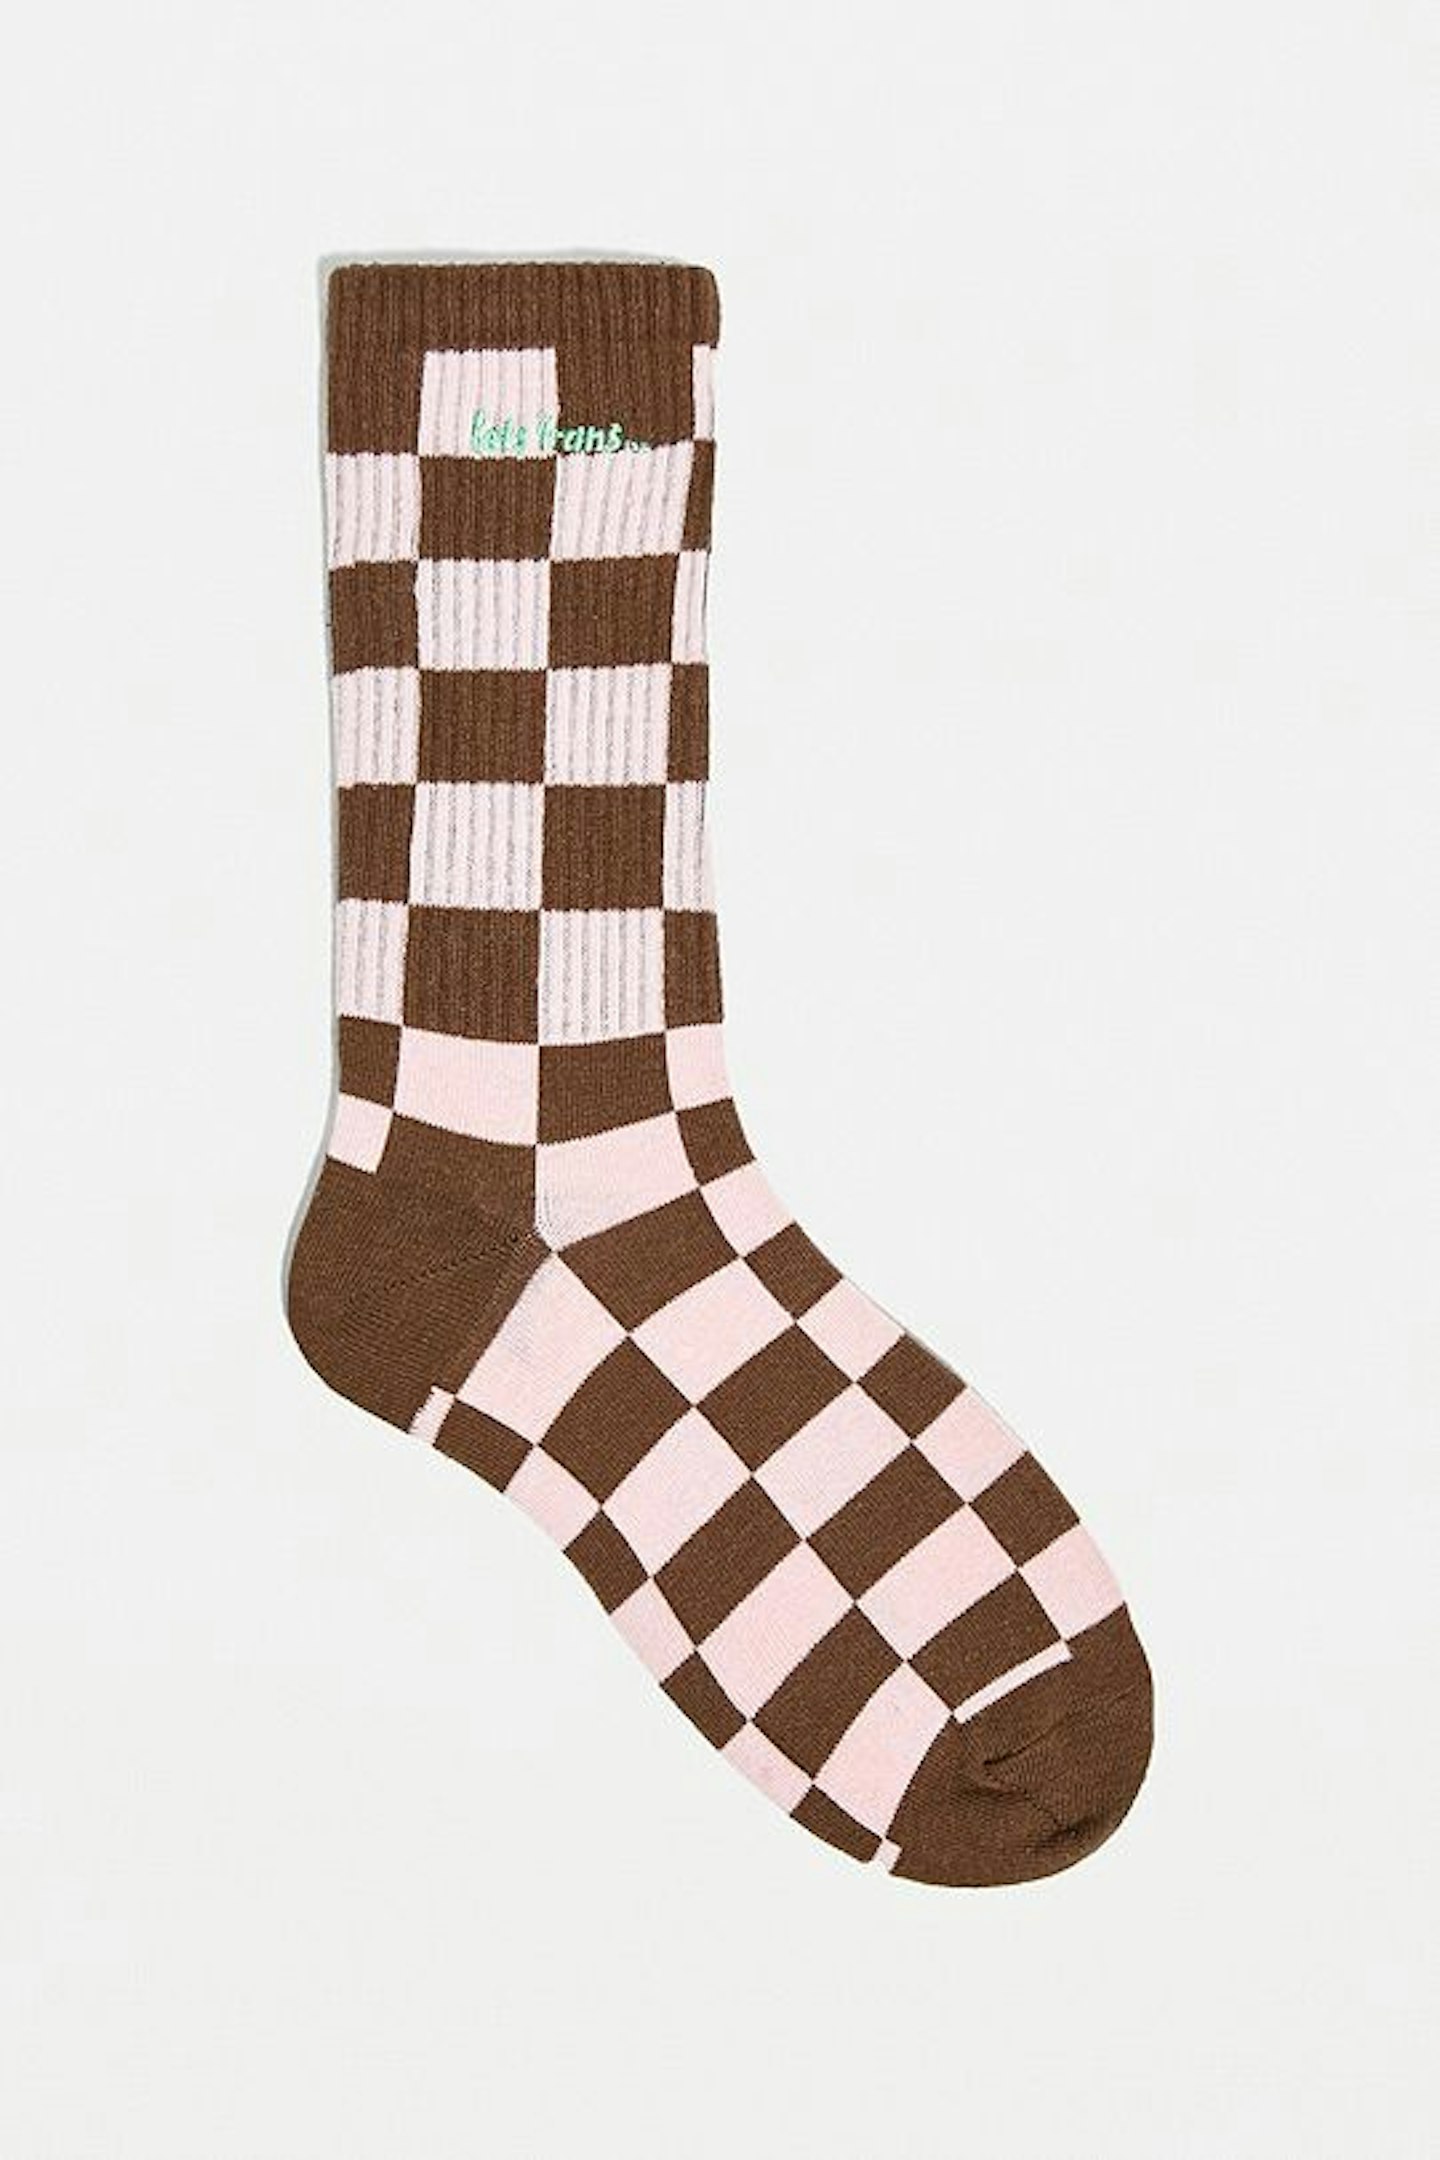 Iets Frans, Pink & Brown Checkerboard Socks, £6